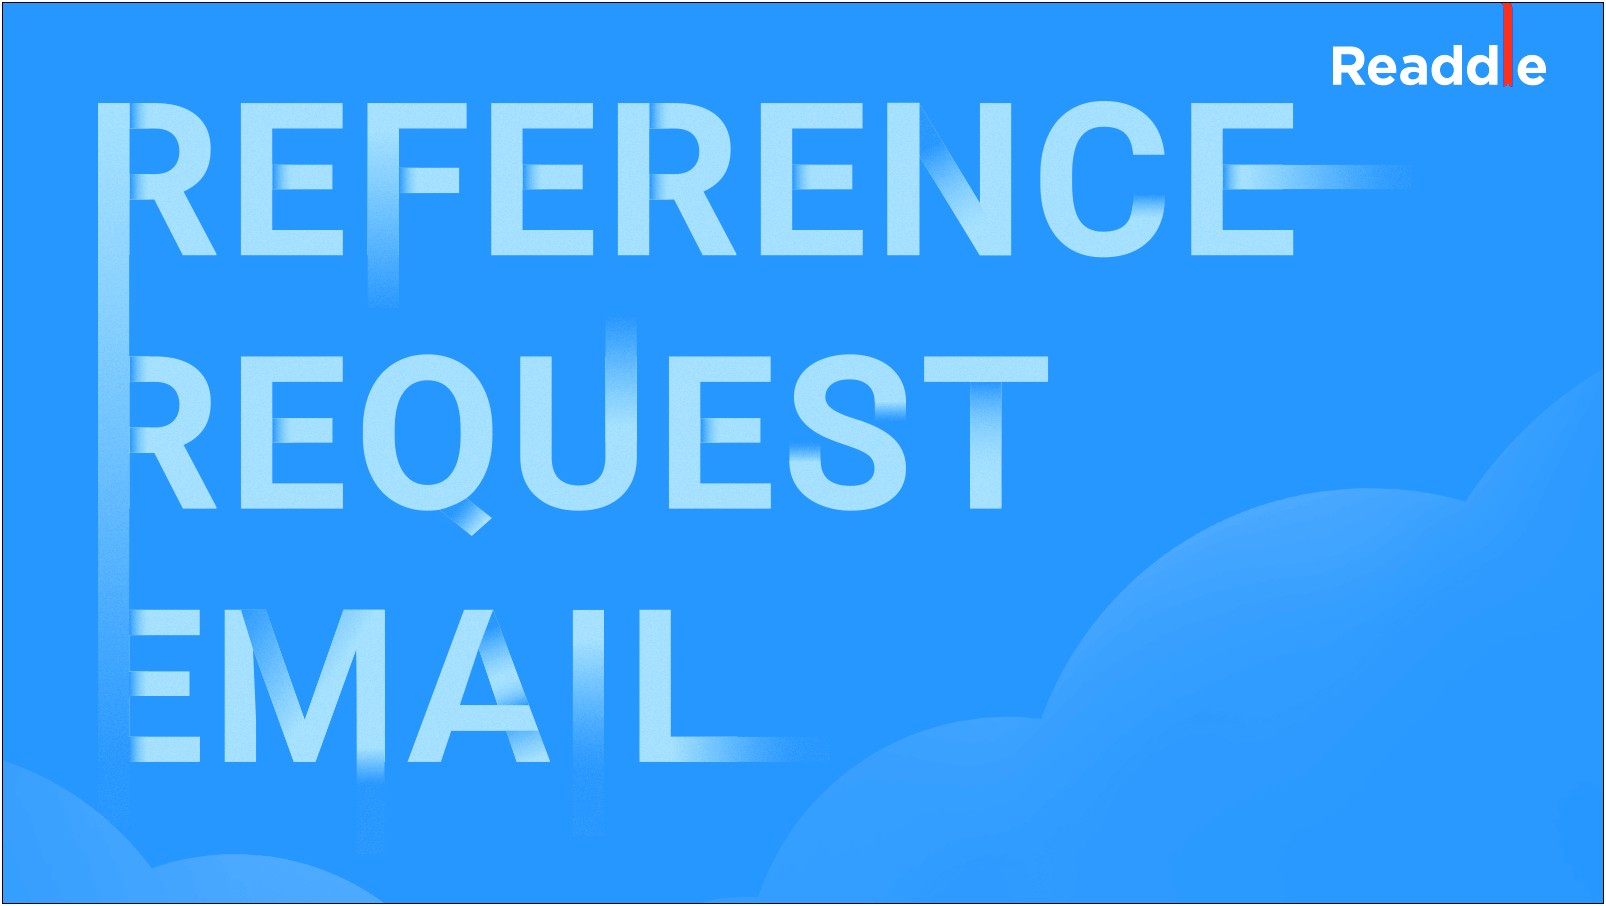 Sample Email Message For Sending Resume